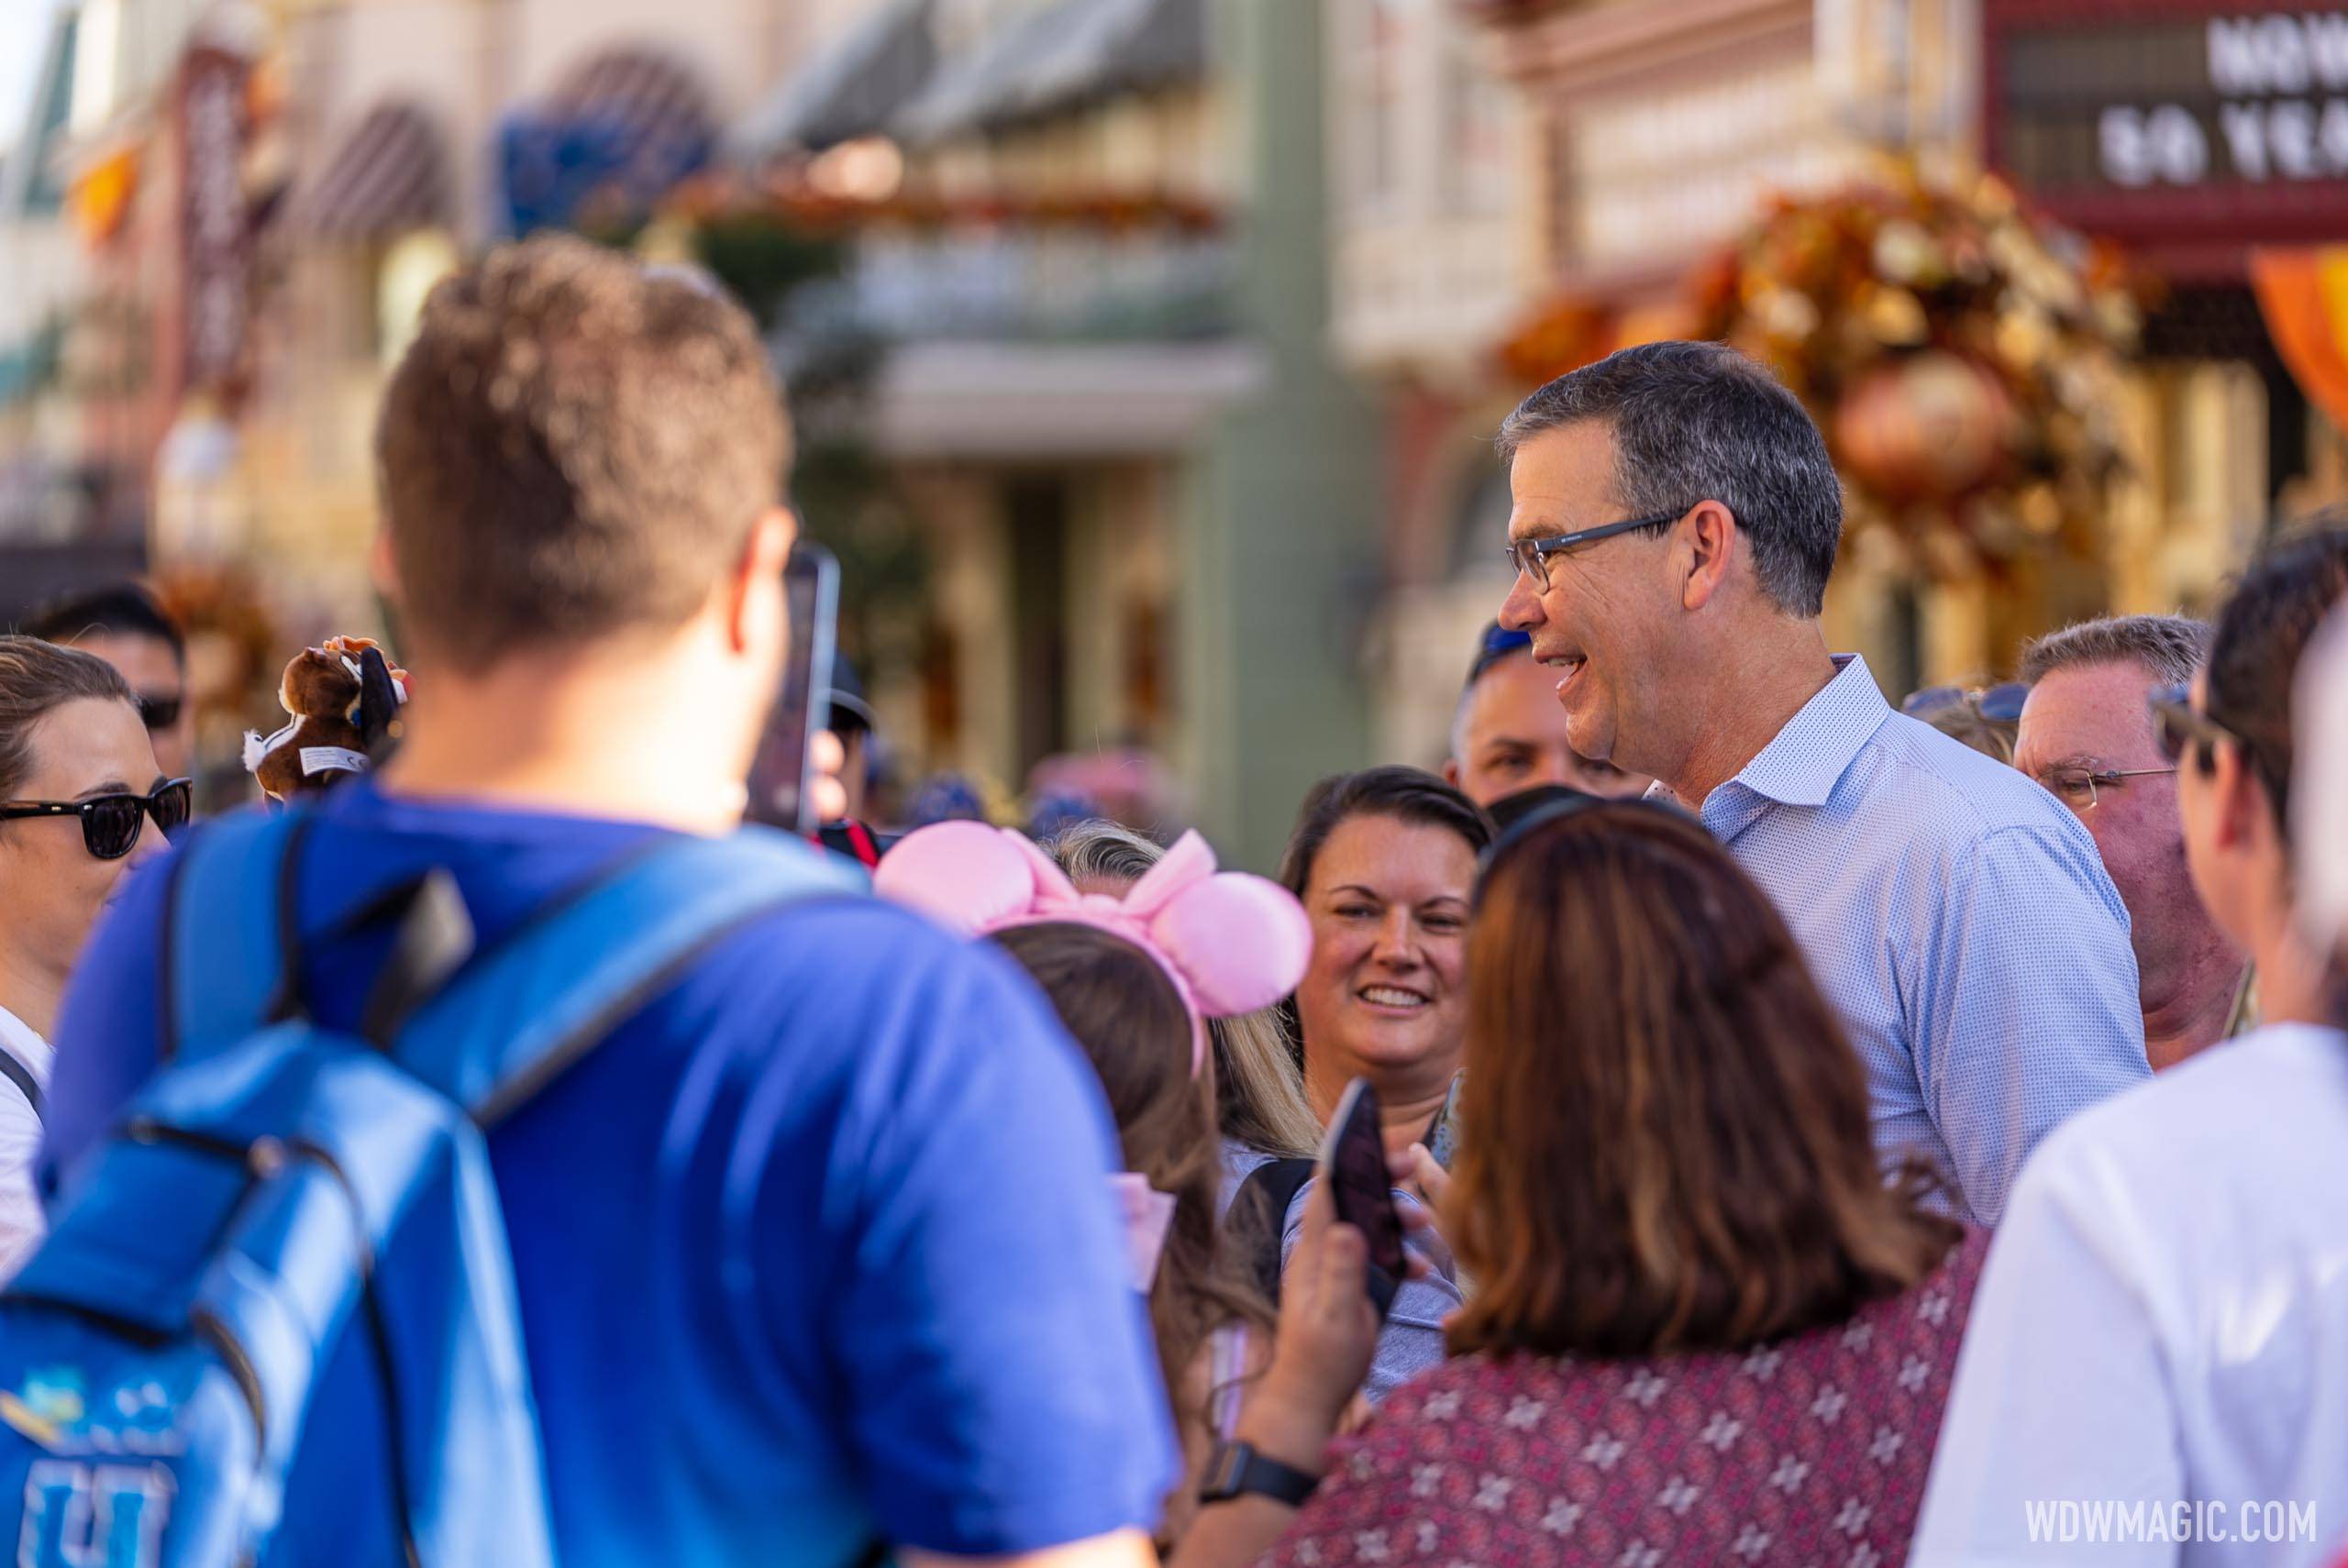 Walt Disney World President Jeff Vahle meets guests on Main Street U.S.A.